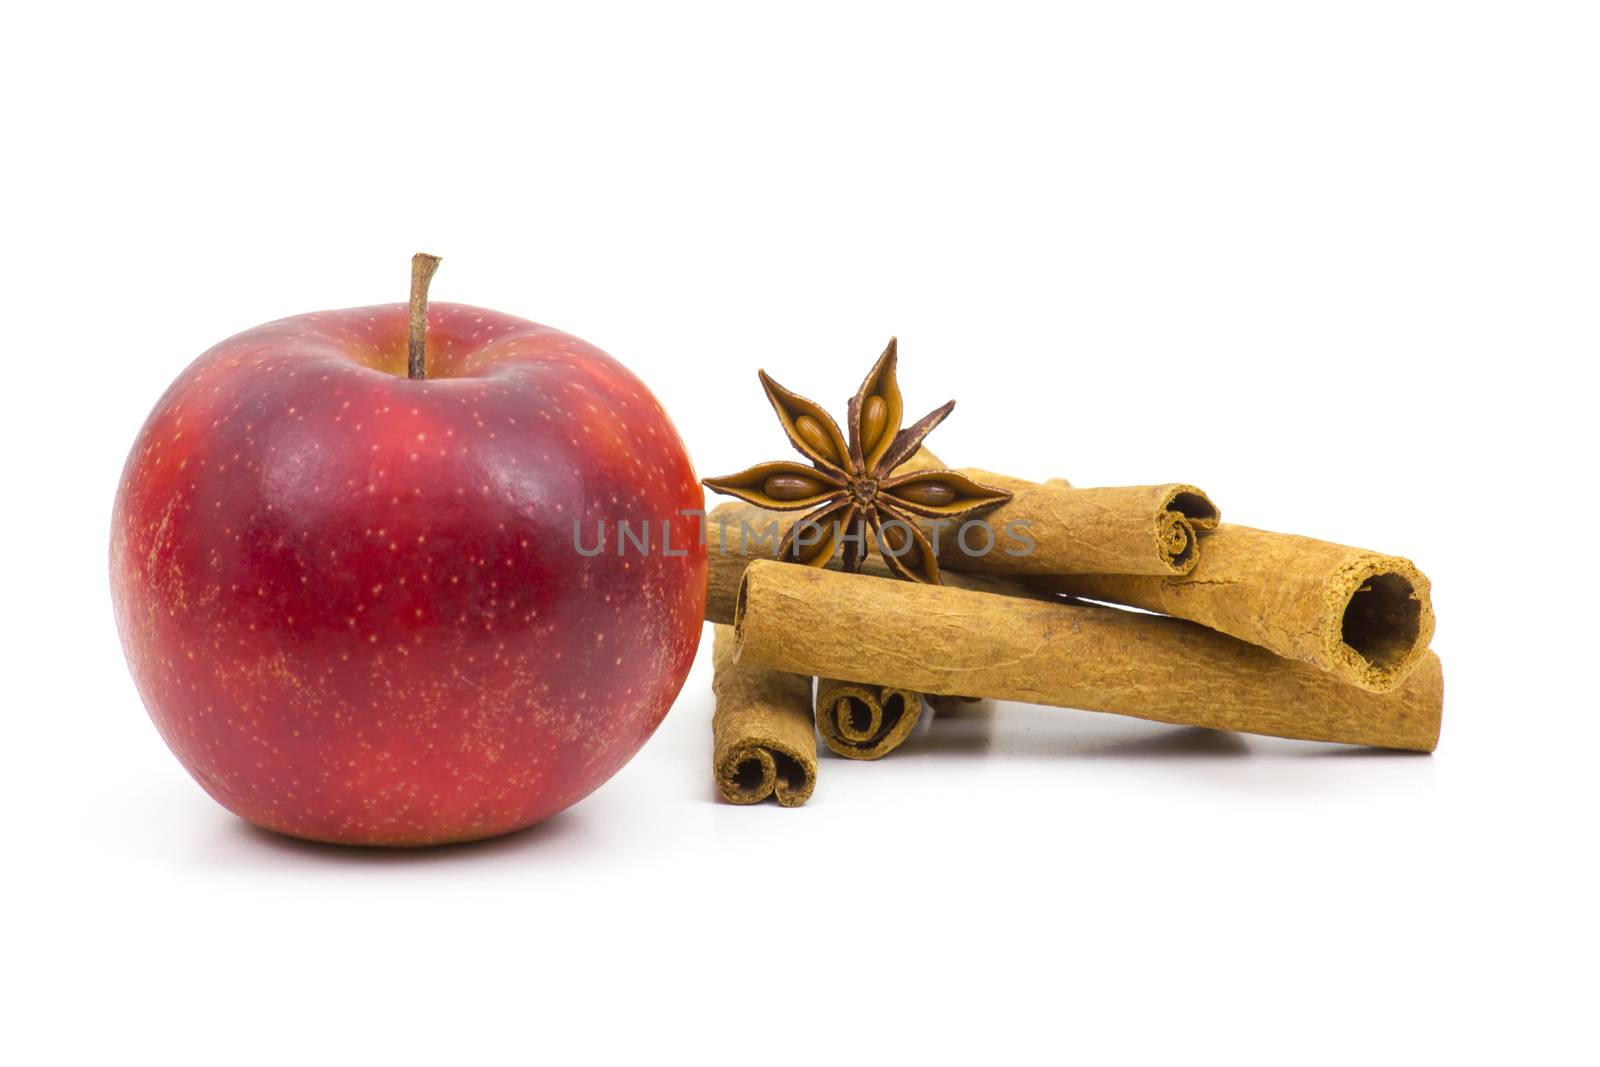 apple, cinnamon sticks and anise by miradrozdowski